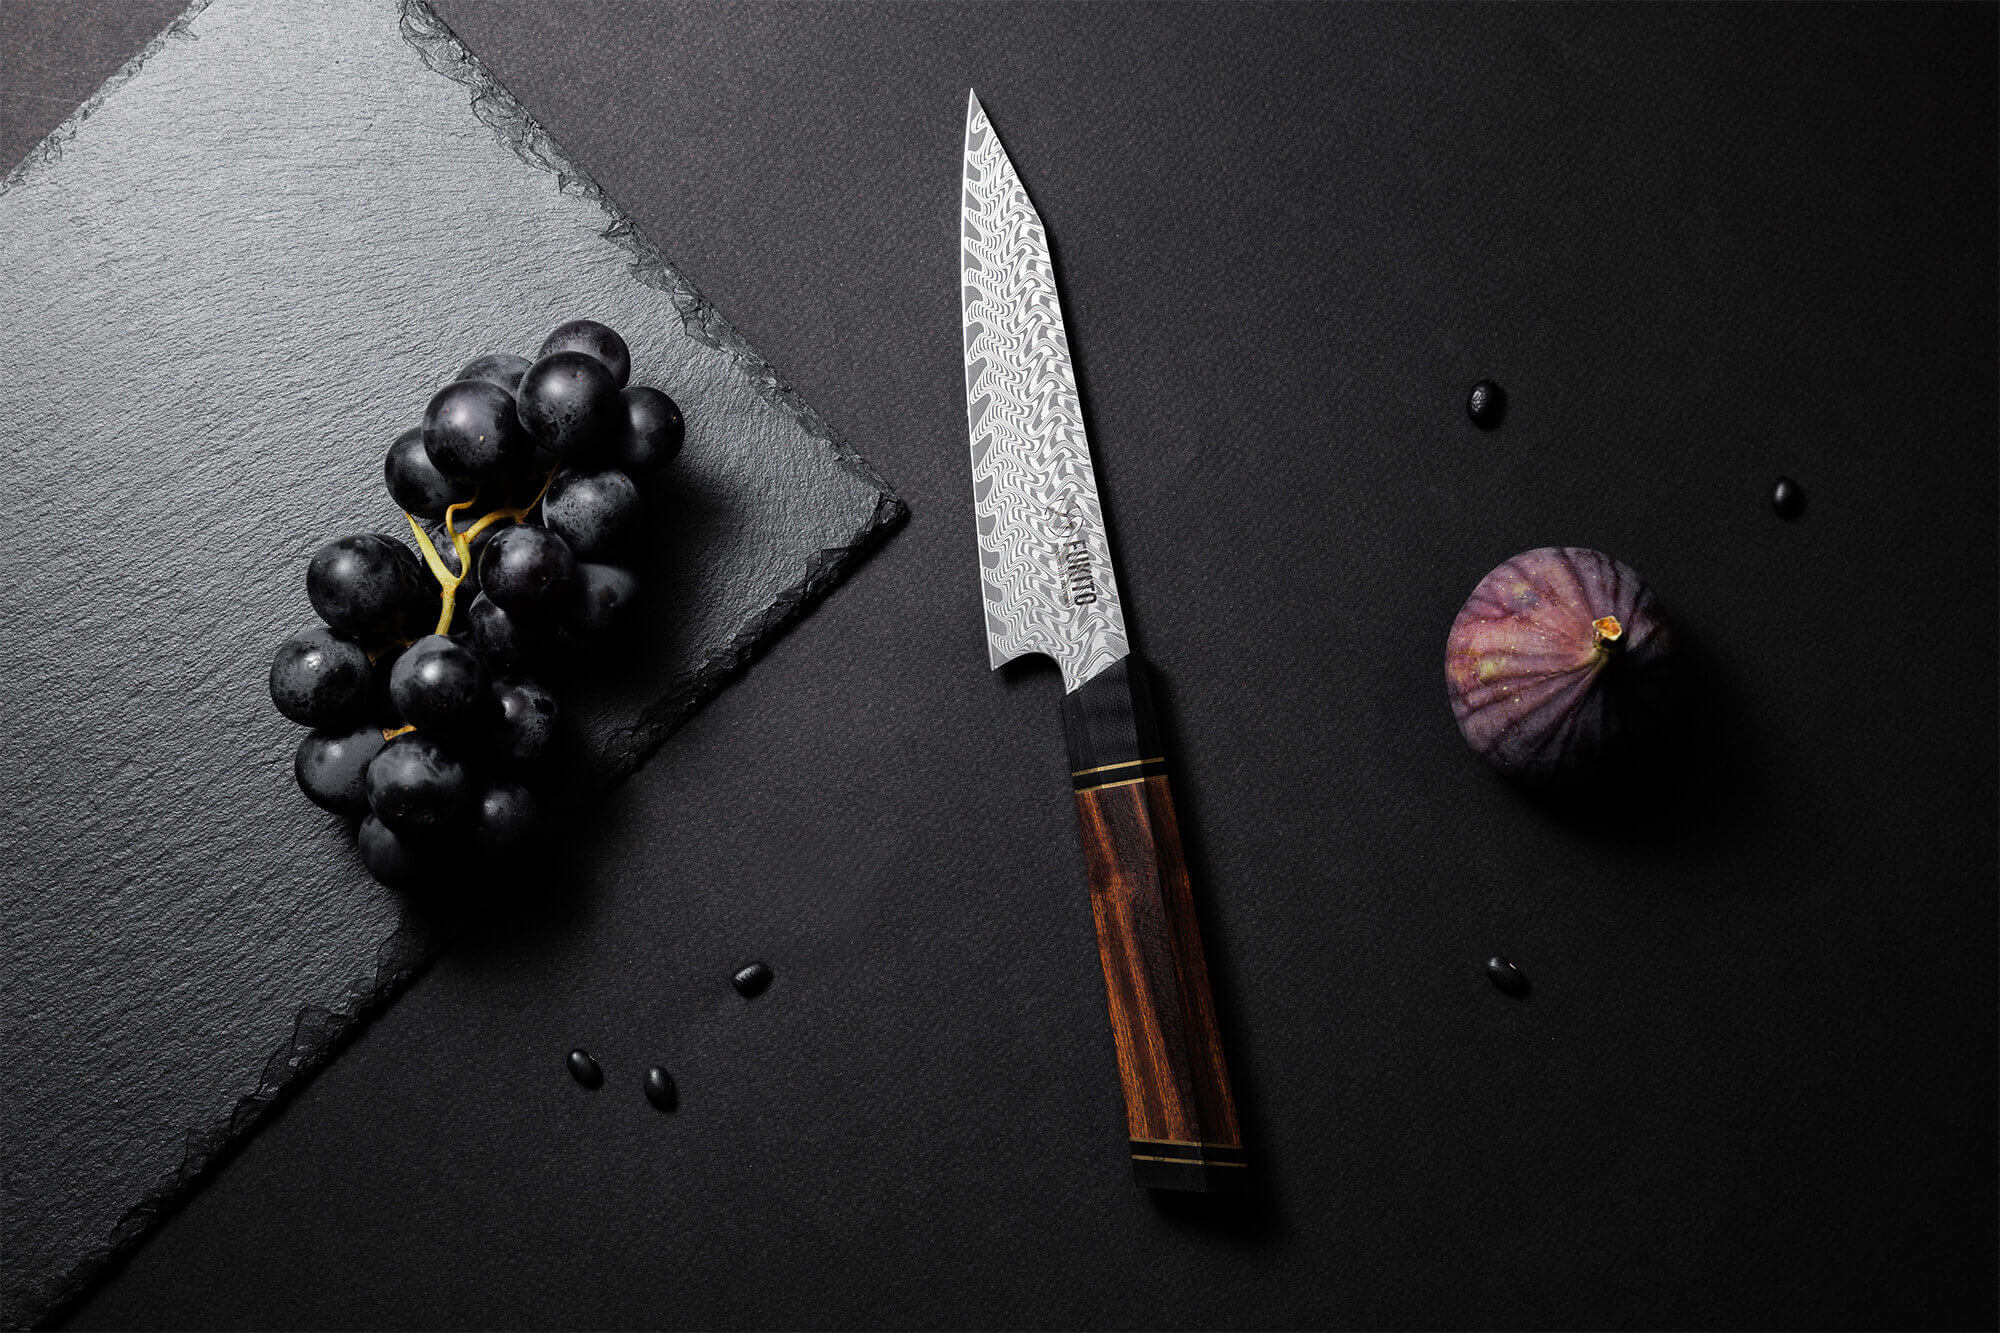 Fukito - Couteau de chef Desert Damas 67 couches 21cm